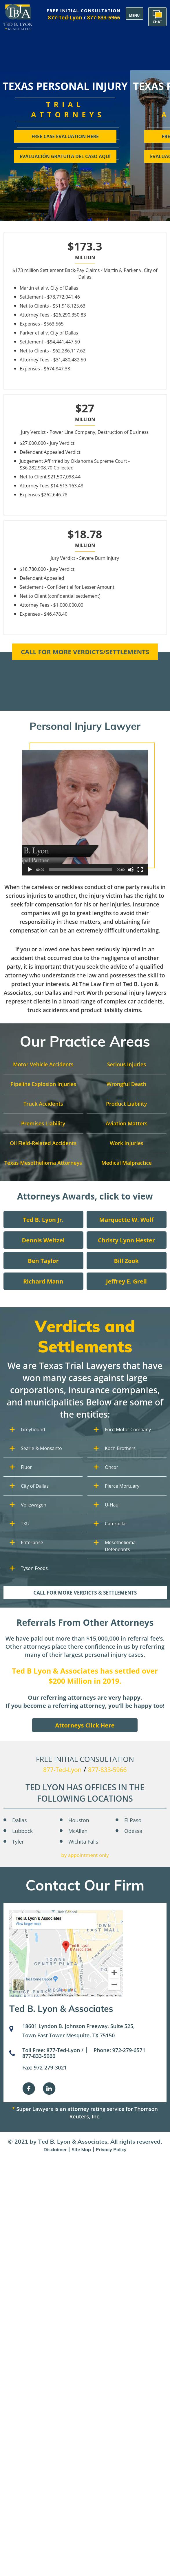 Lyon Ted B & Associates - Mesquite TX Lawyers